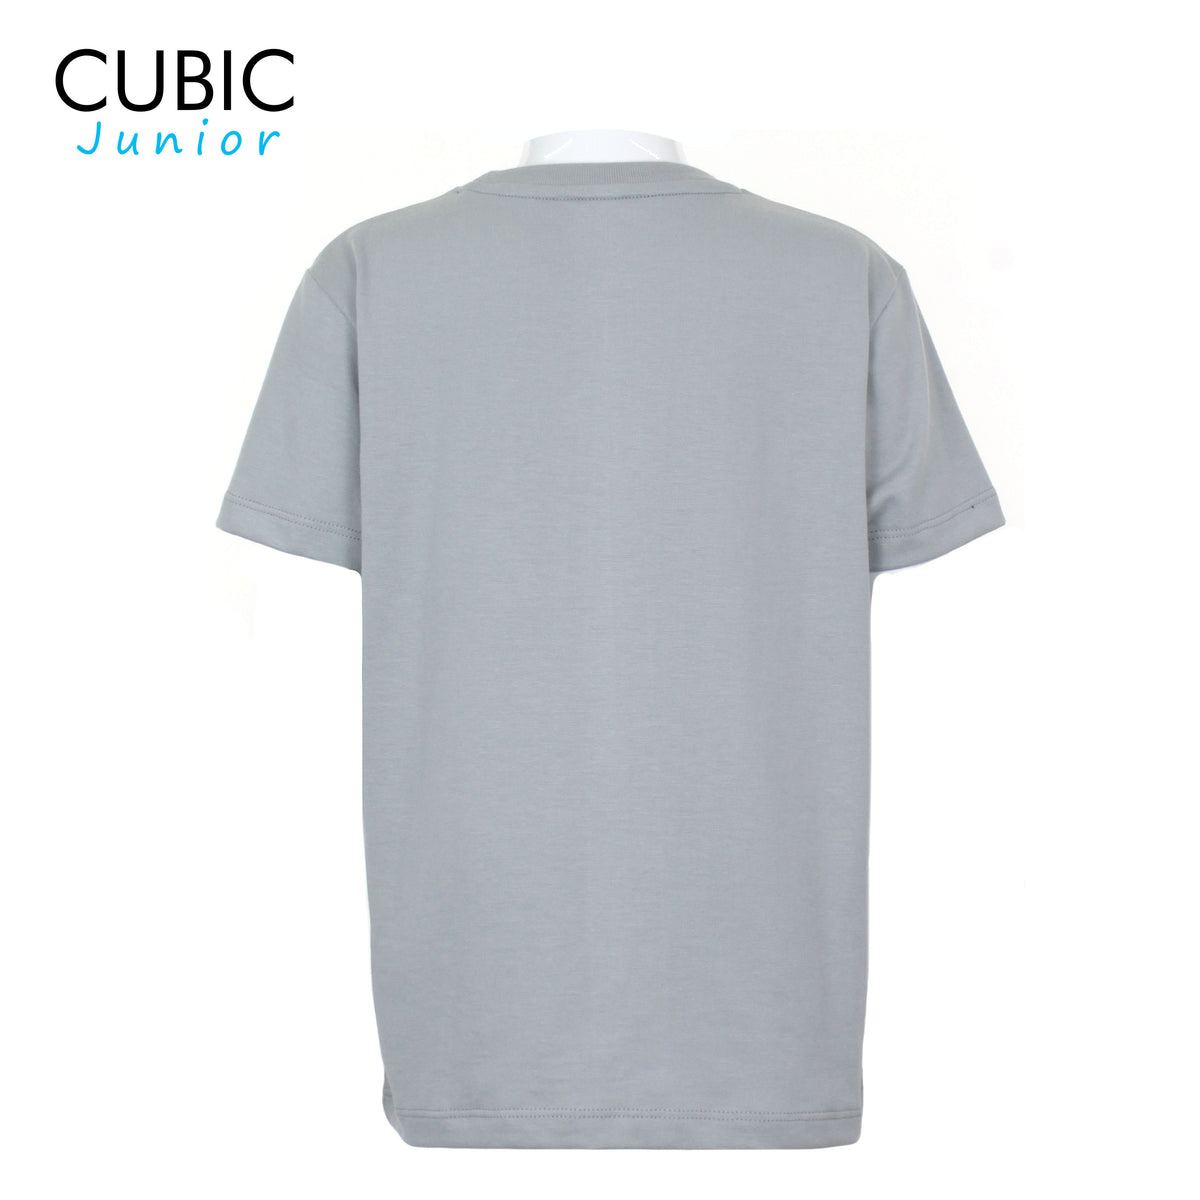 Cubic Boys Kids Round Neck Eat, Sleep, Game, Repeat Graphic Print Design T-shirt Shirt Top for Boys - CKJ2302R